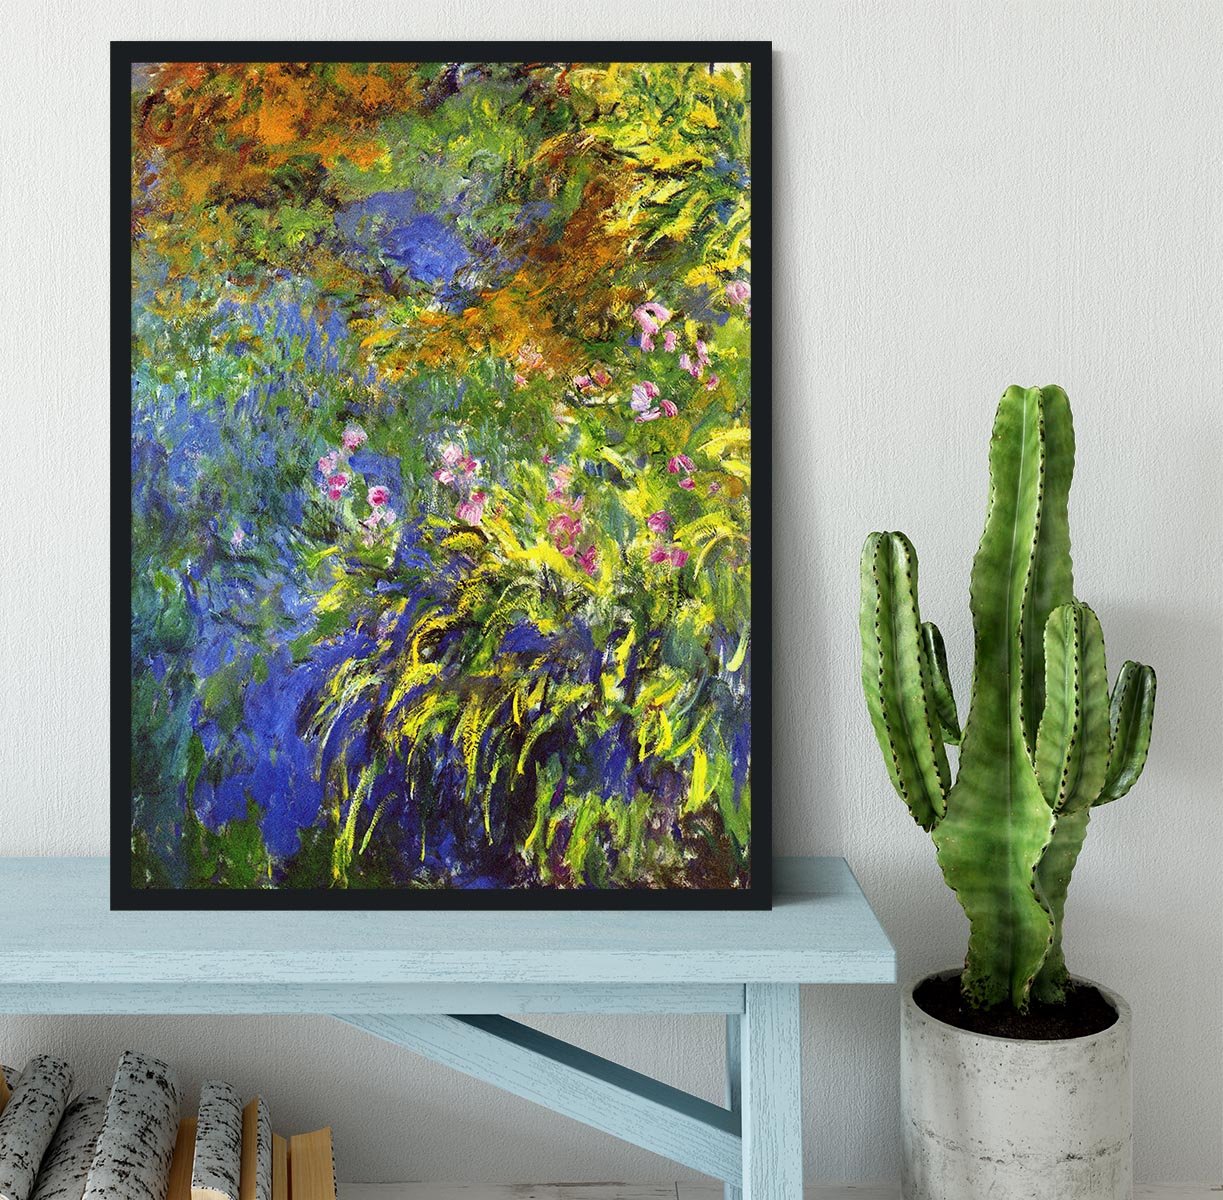 Iris at the sea rose pond 2 by Monet Framed Print - Canvas Art Rocks - 2